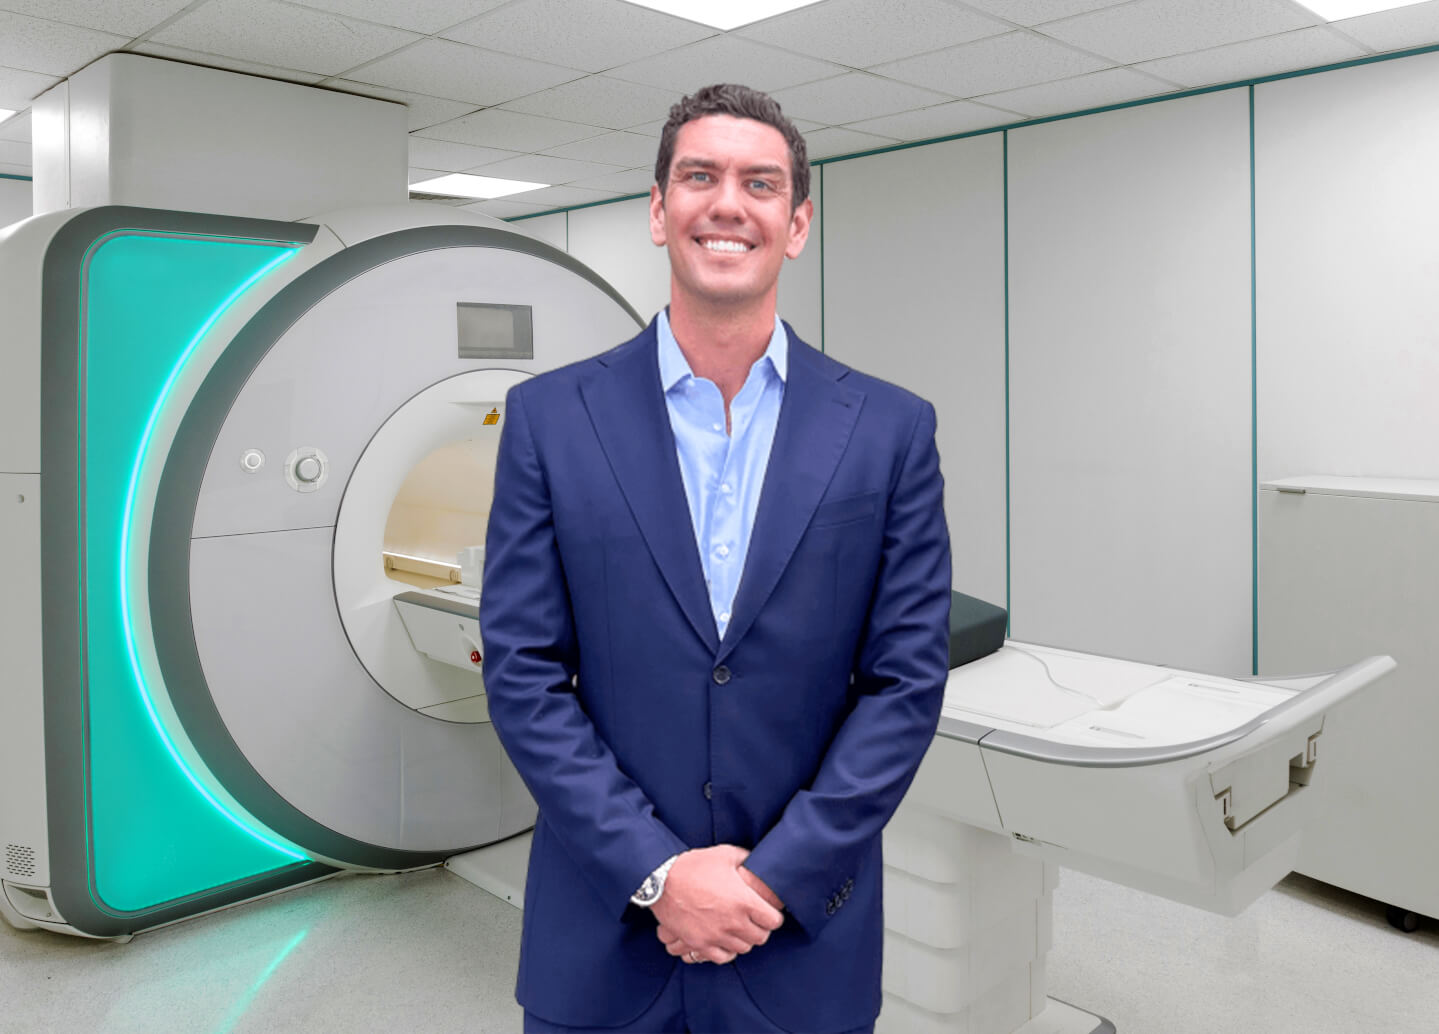 Spencer Howe standing next to an MRI machine